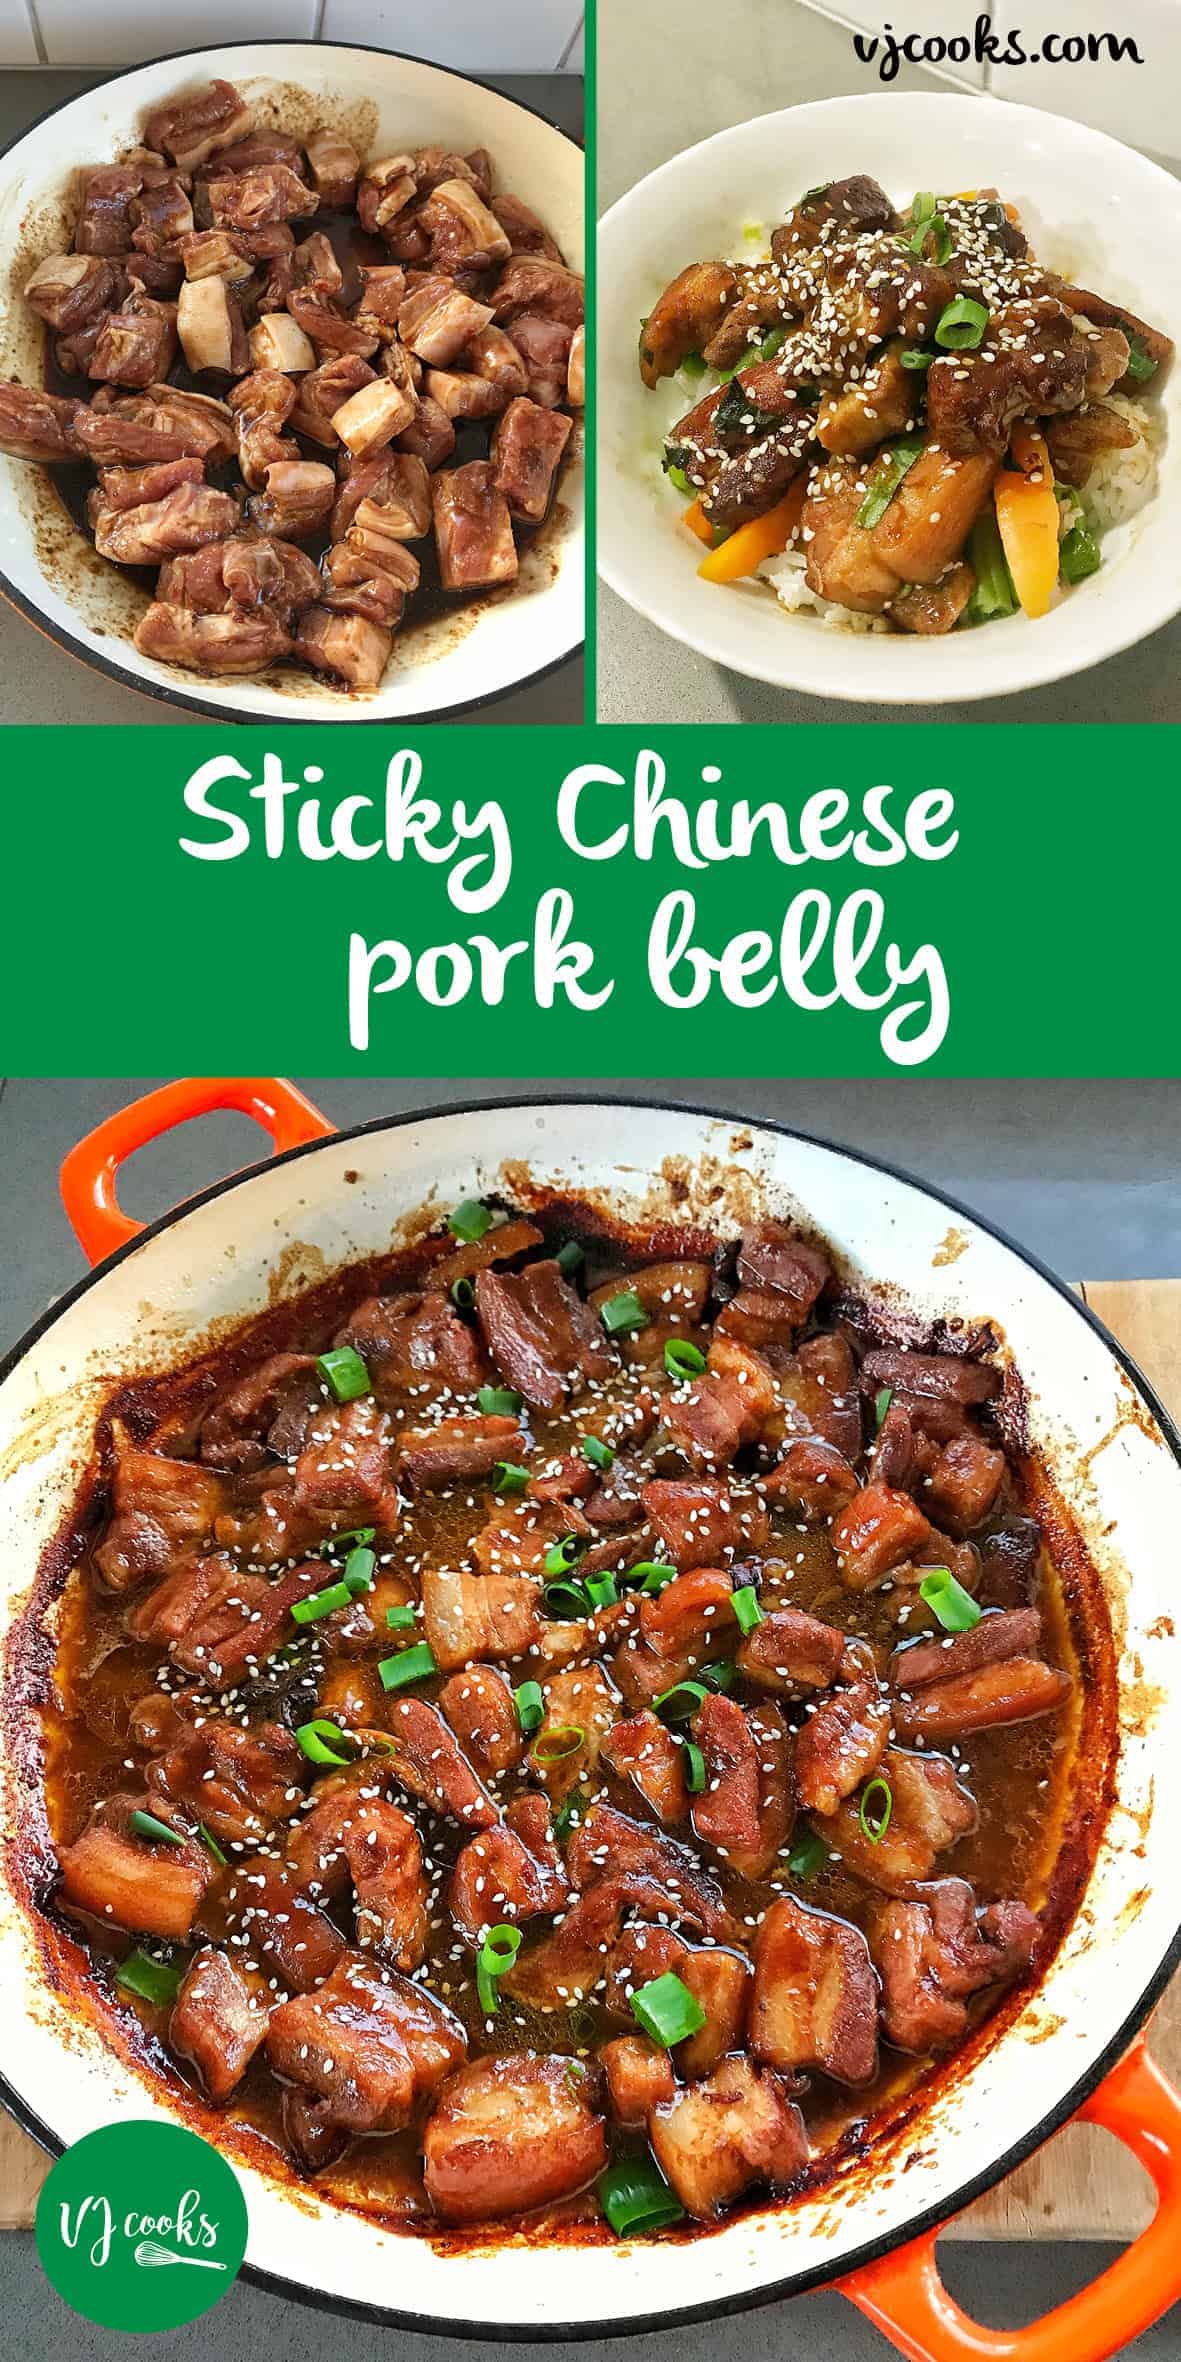 Sticky Chinese Pork Belly with 5 spice. Recipe by VJ cooks. #vjcooks #porkbelly #5spicepork 